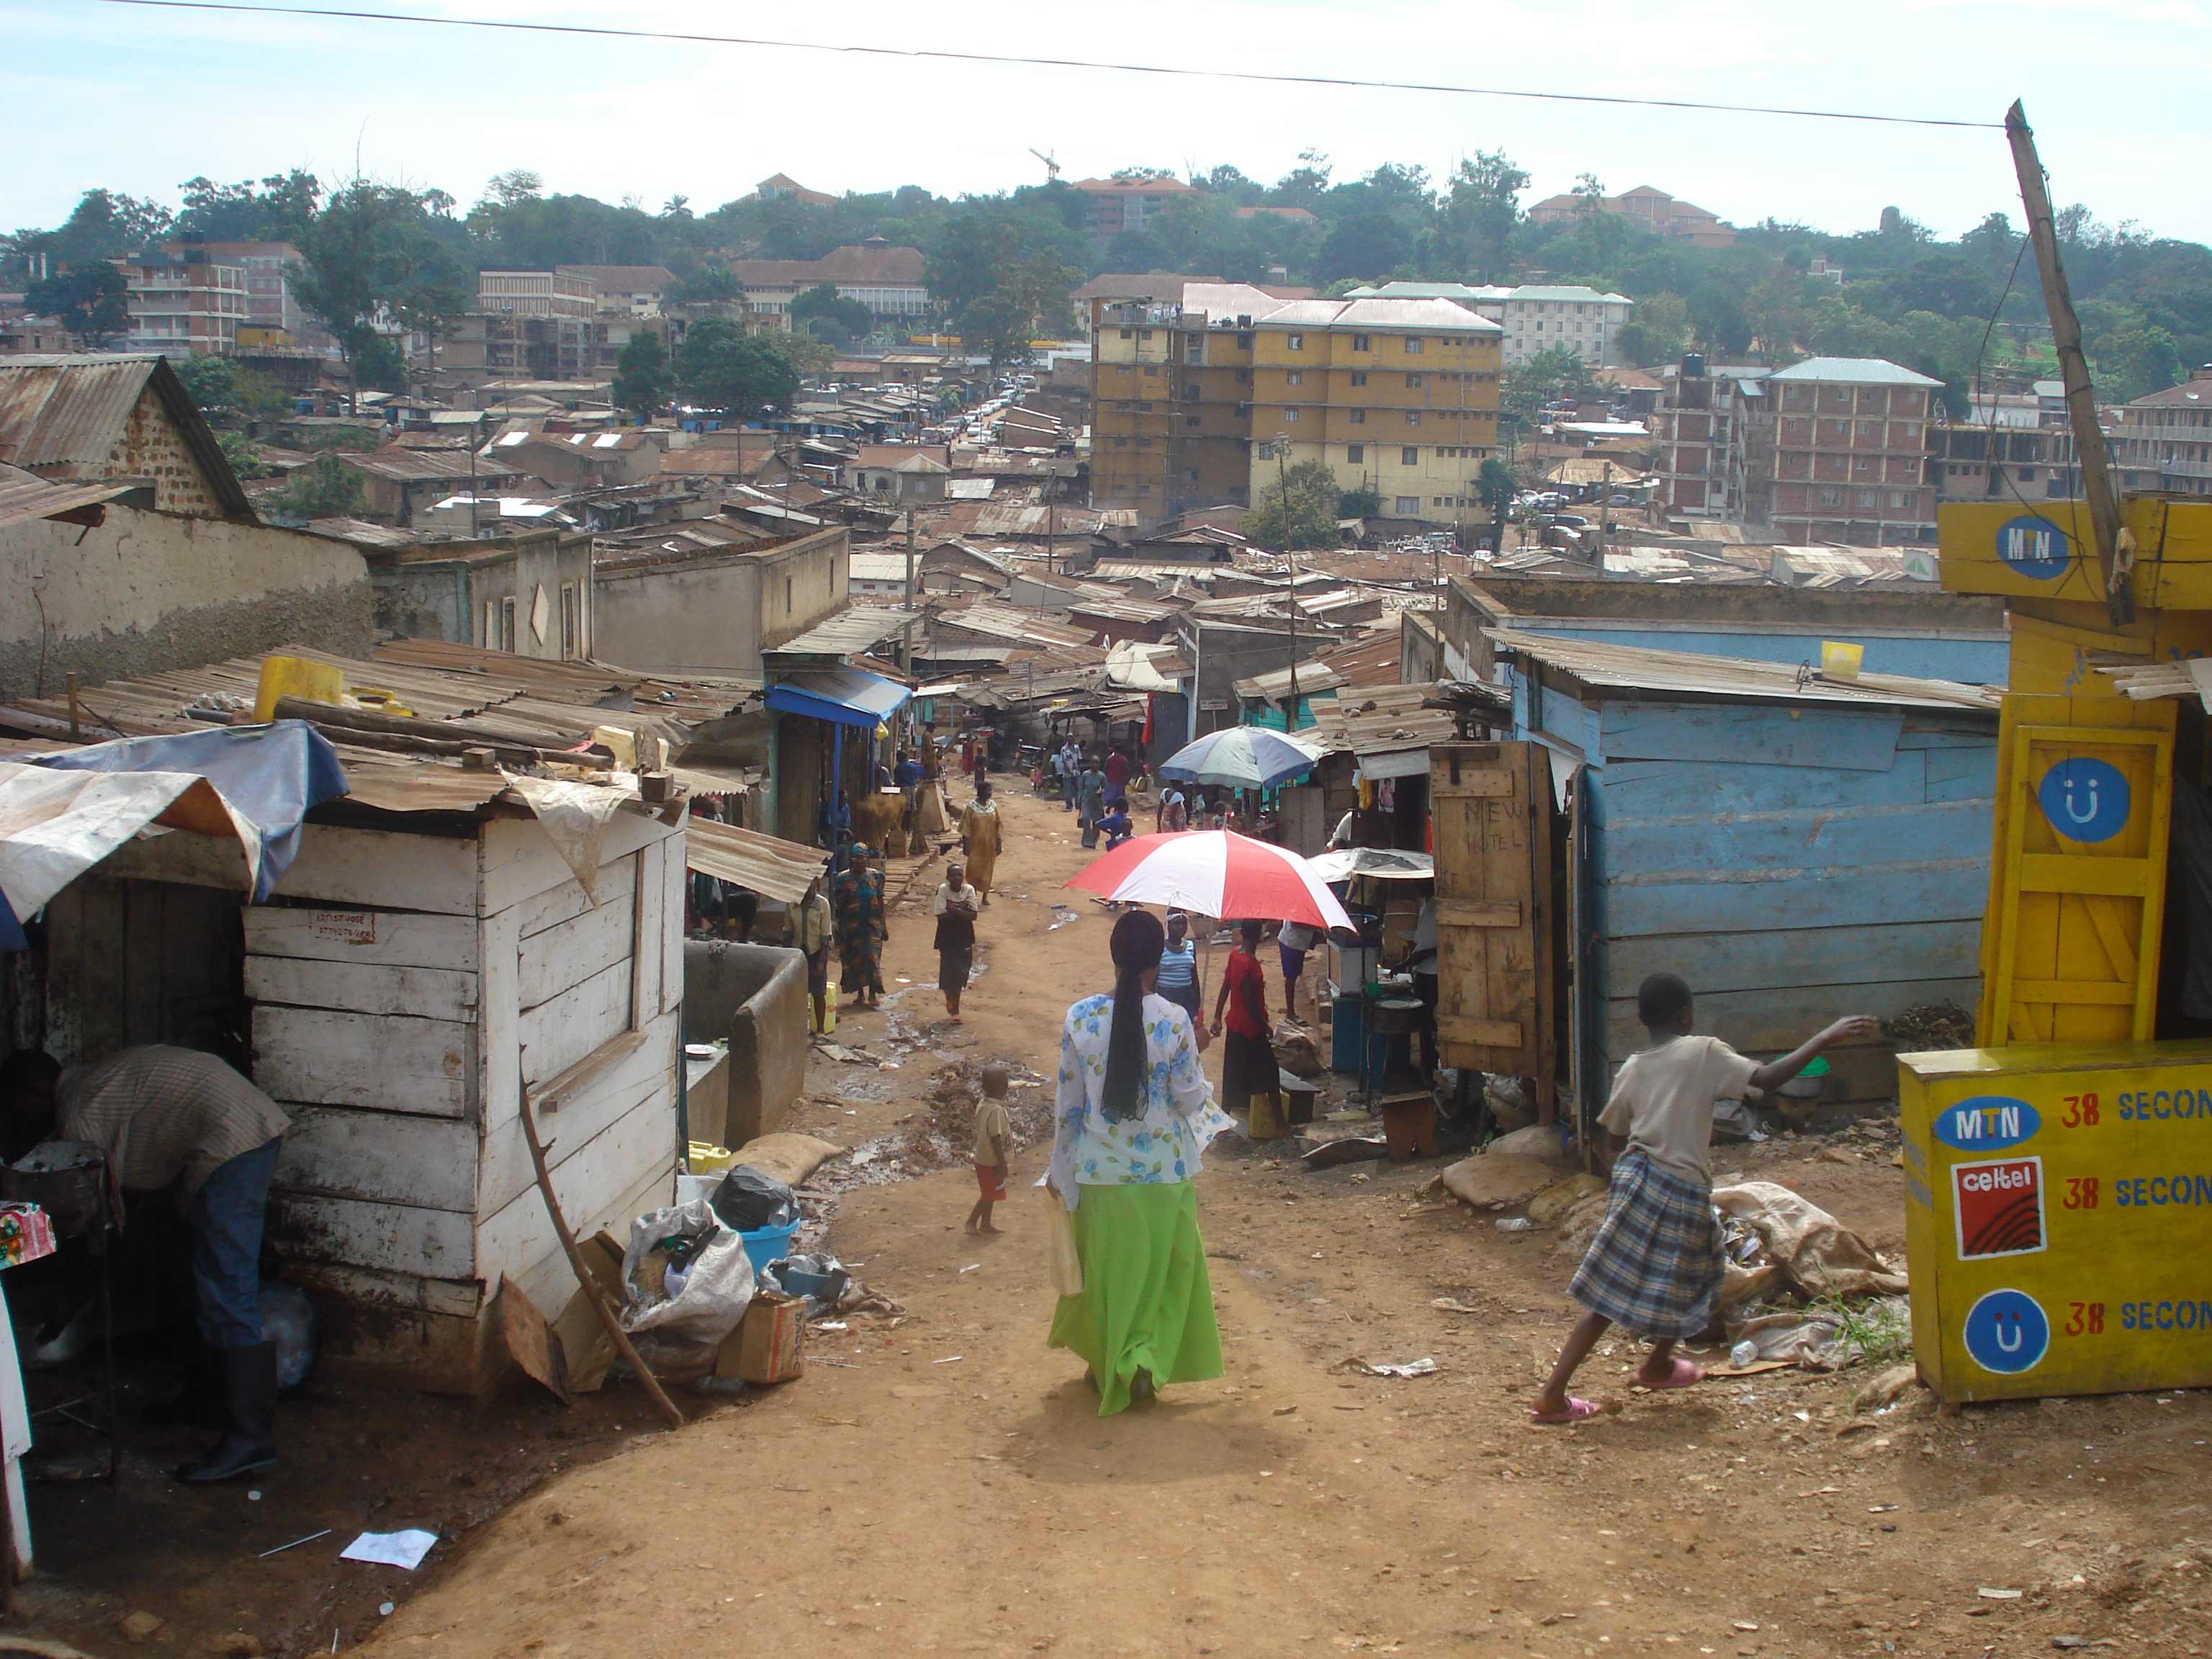 Katanga Slums - Free Walking Tour in Kampala Uganda | Ummi Goes Where?